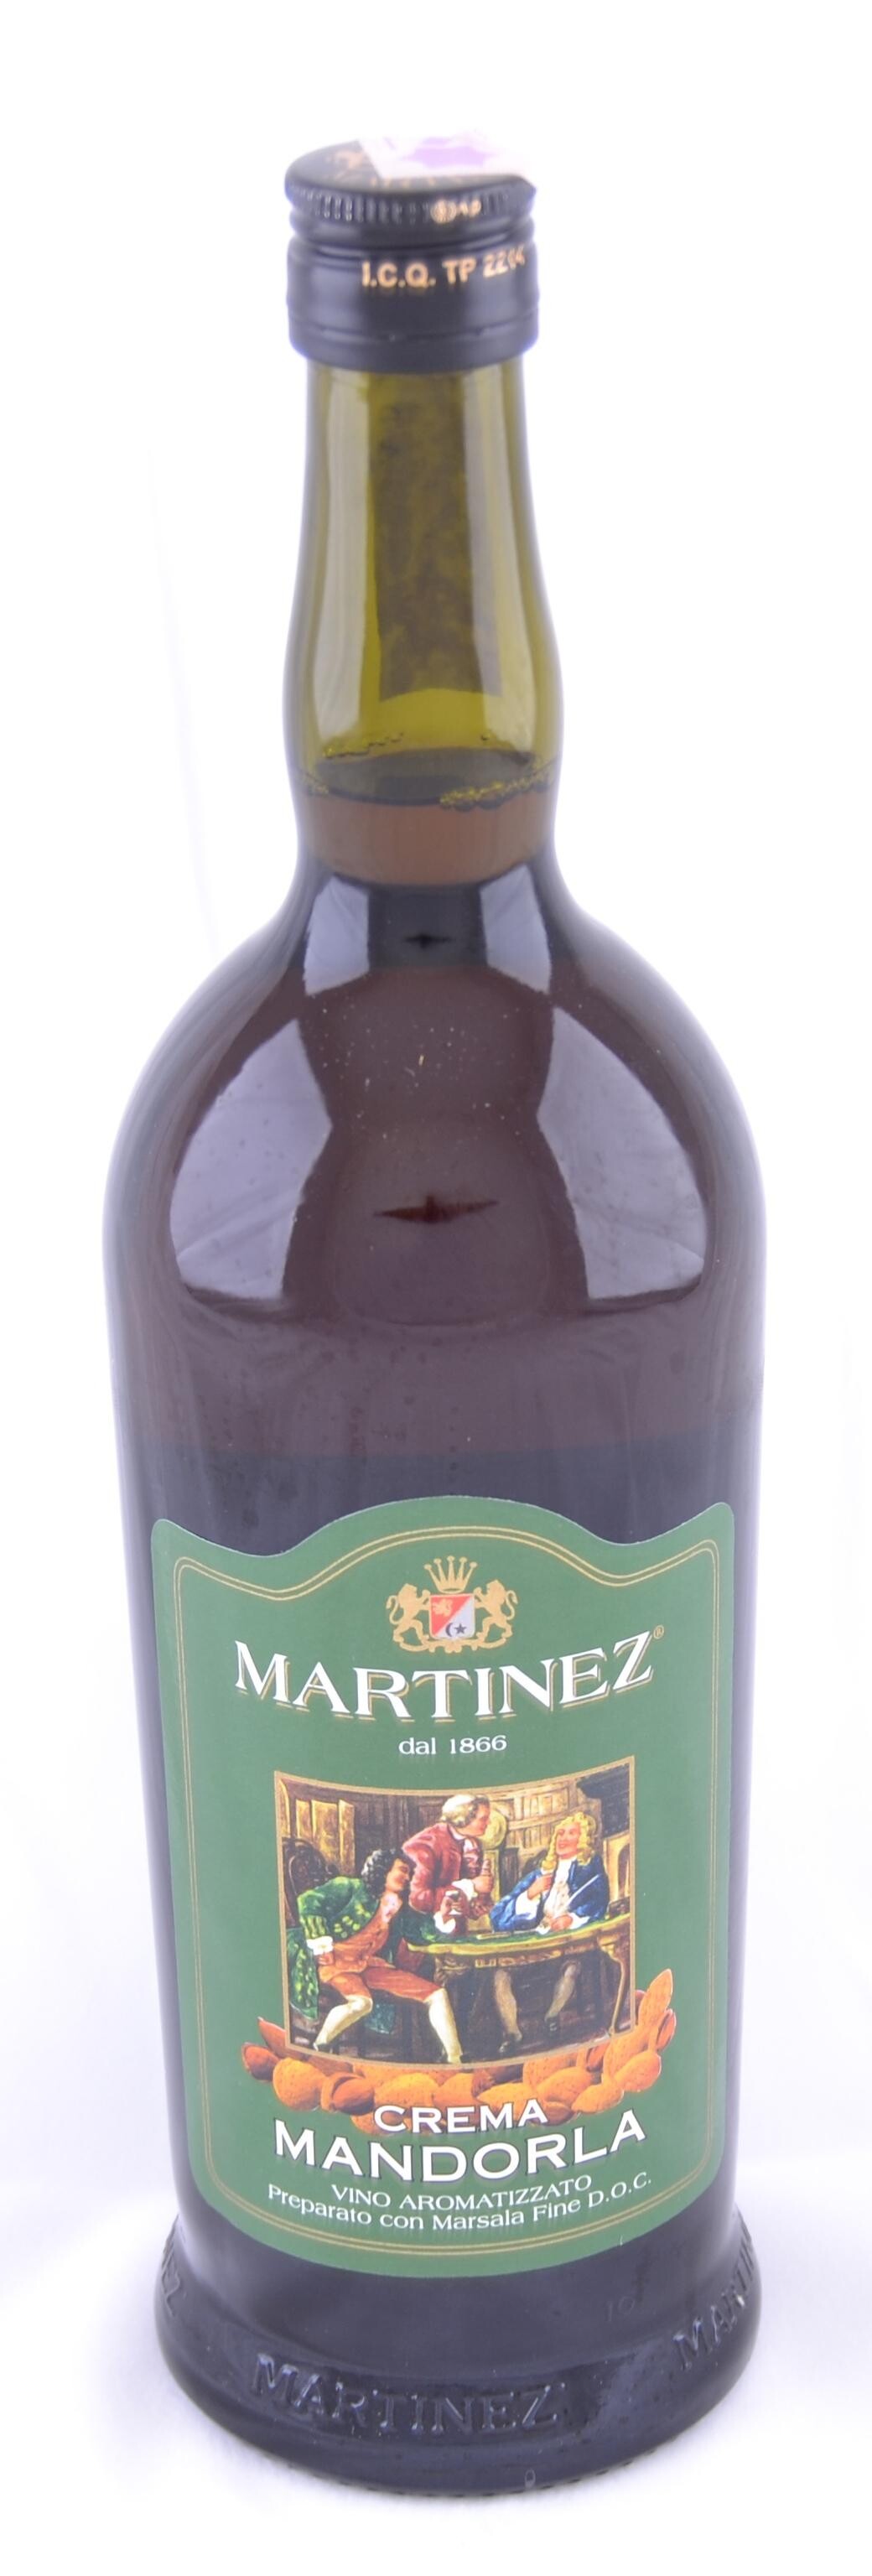 Marsala wine Mandorla 1L 16% Martinez - Italy